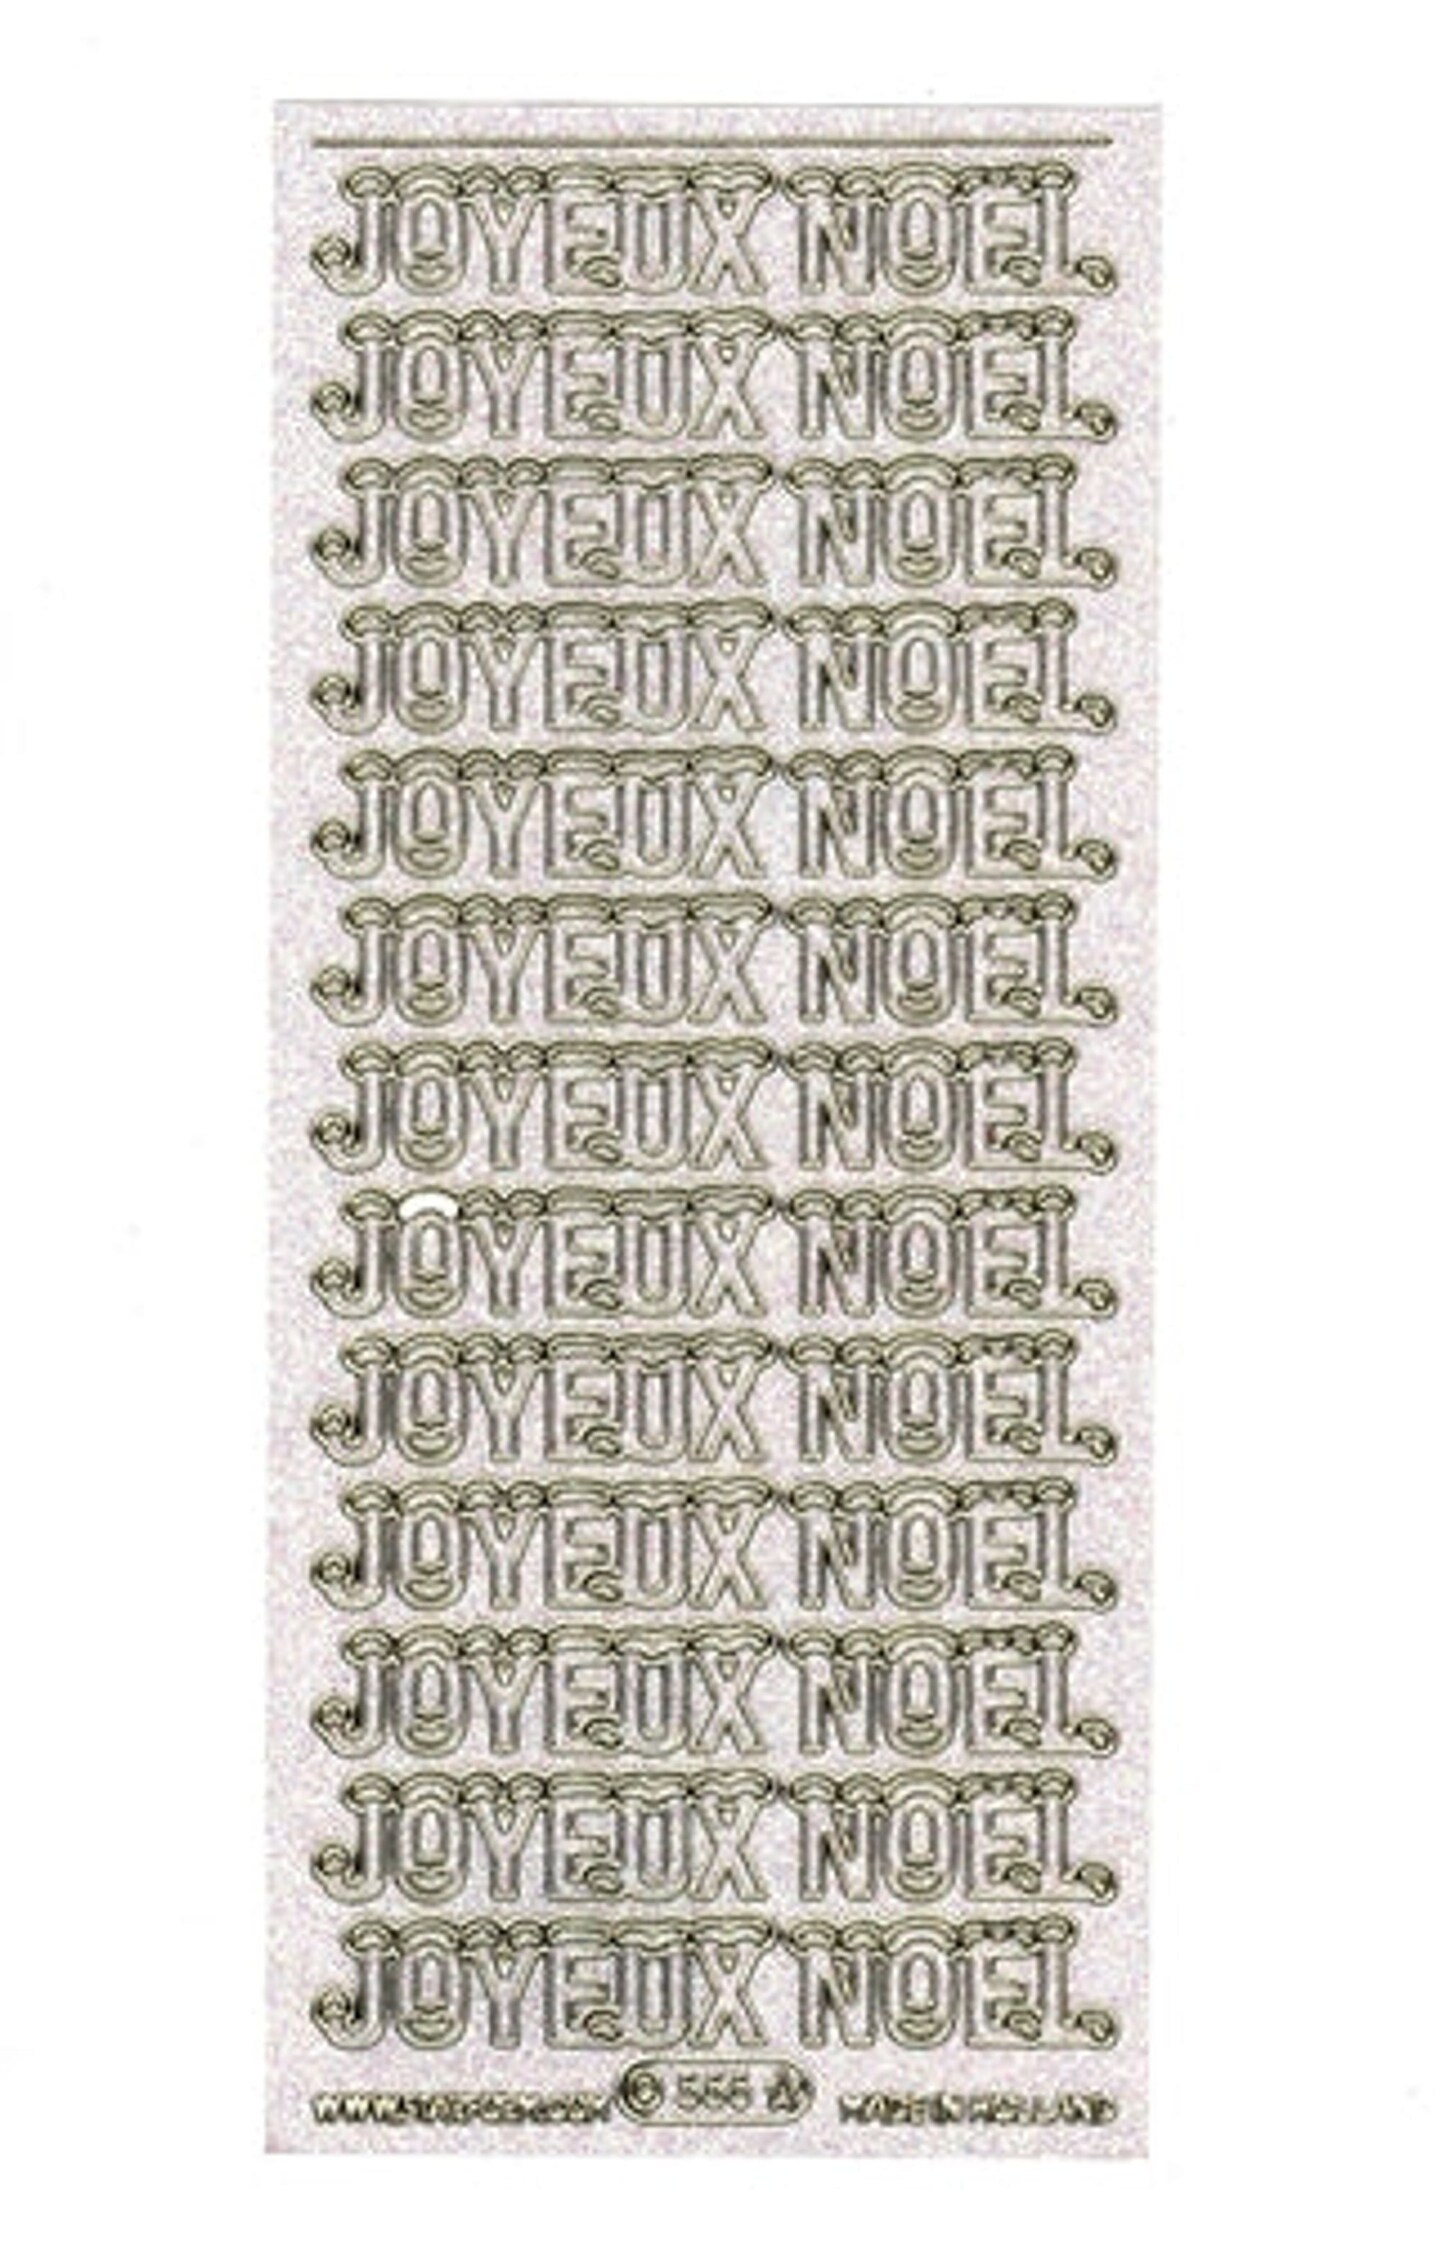 Starform Deco Stickers - Joyeux Noel - Transparent Glitter Silver